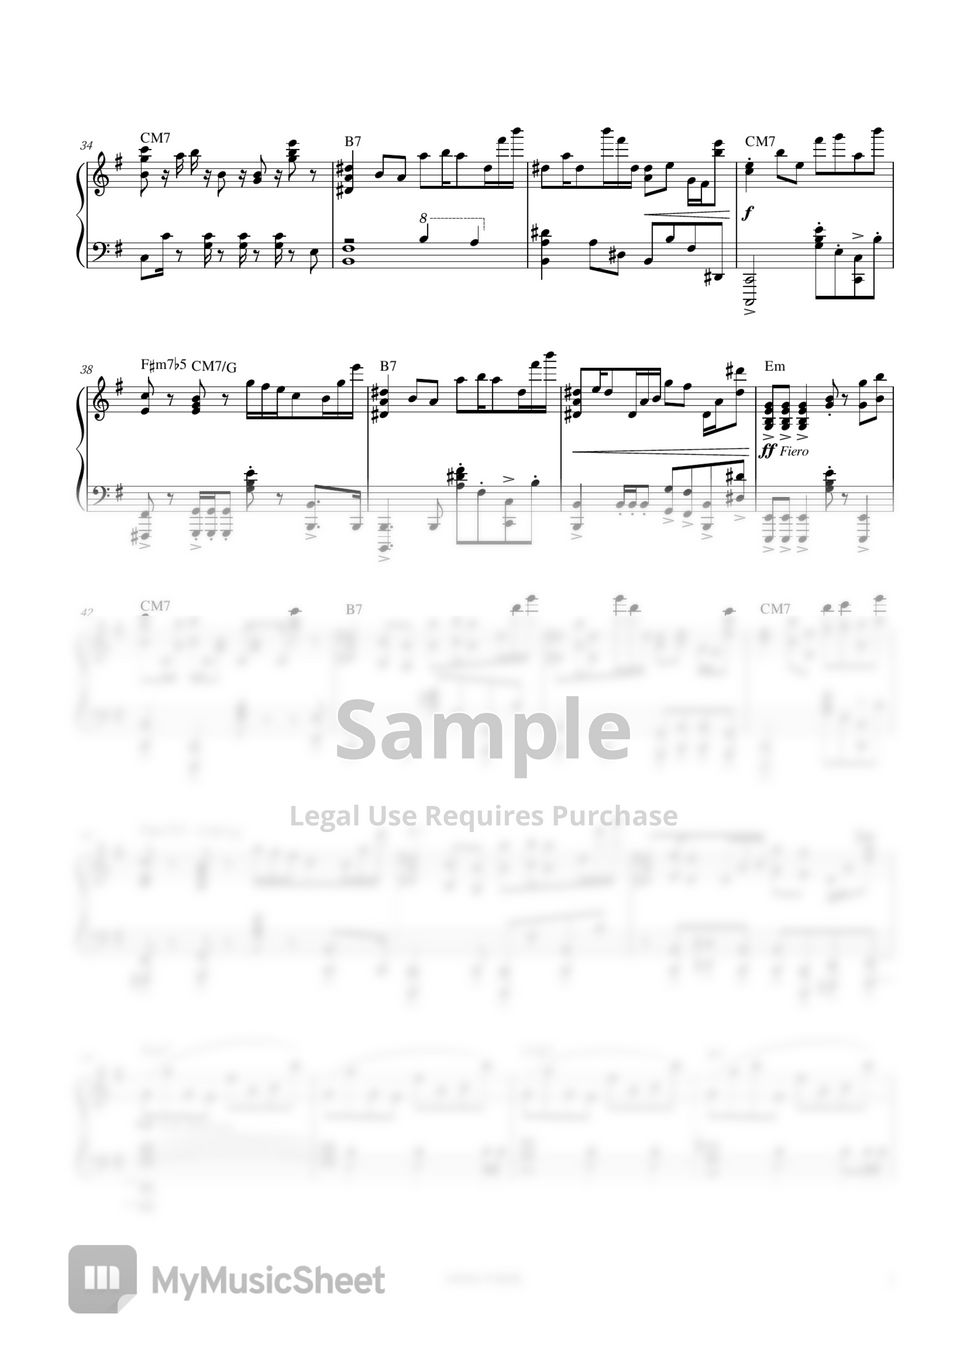 Playing God – Polyphia (Violin) - piano tutorial